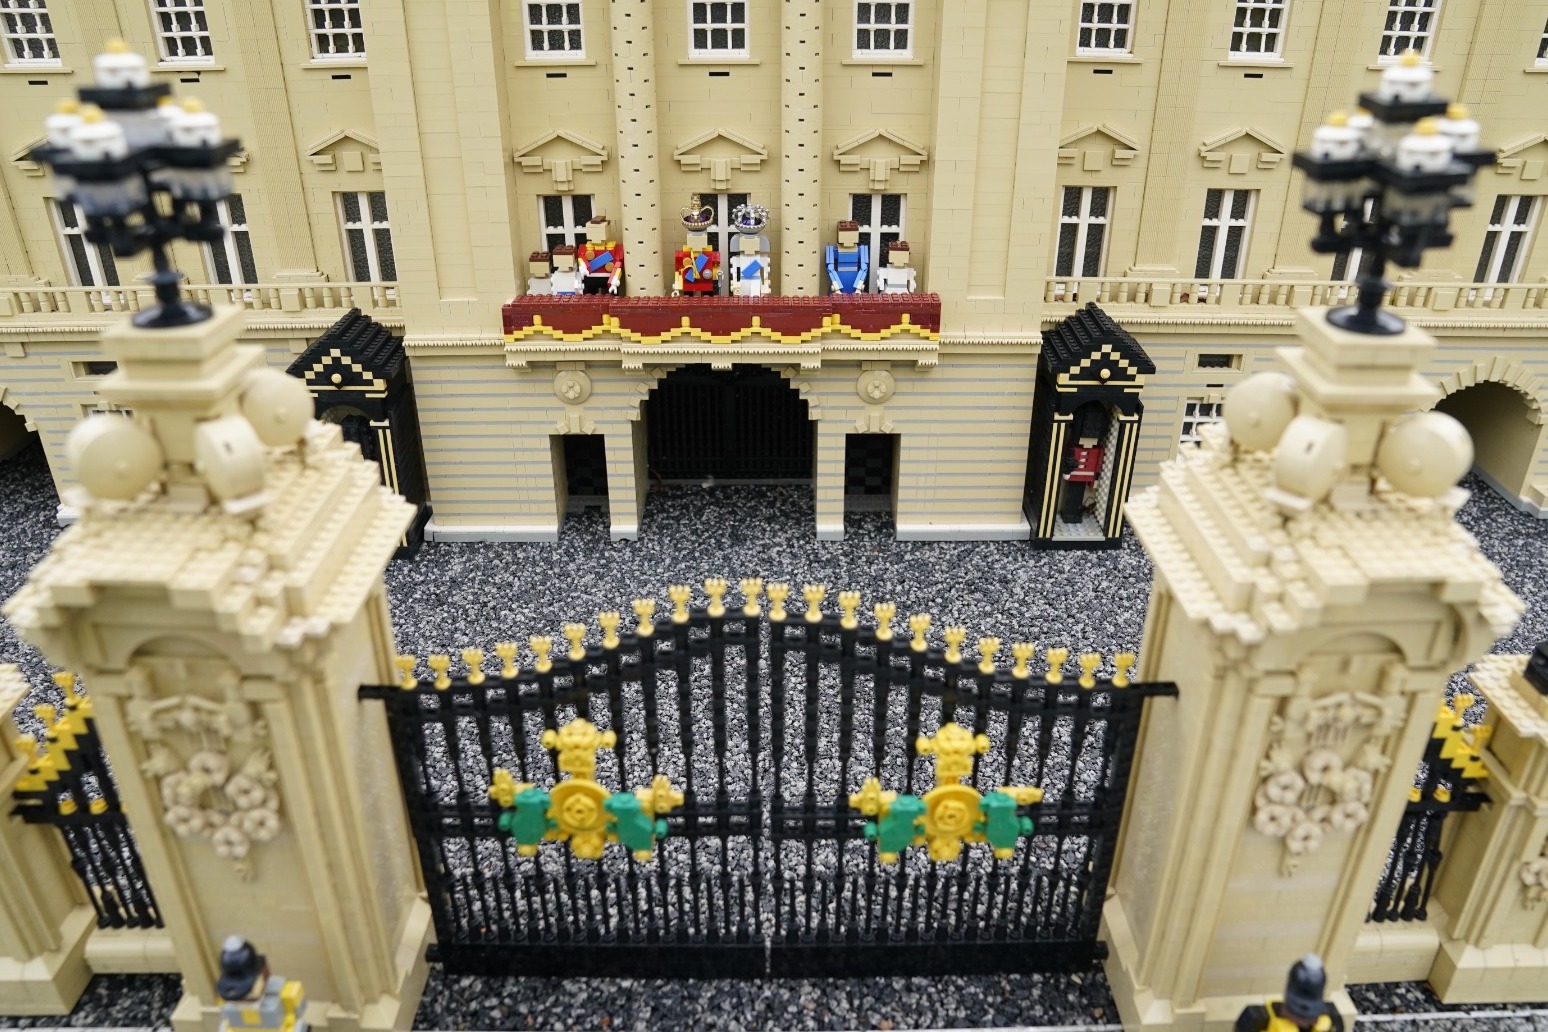 Legoland reveals new miniature models for the King’s coronation 